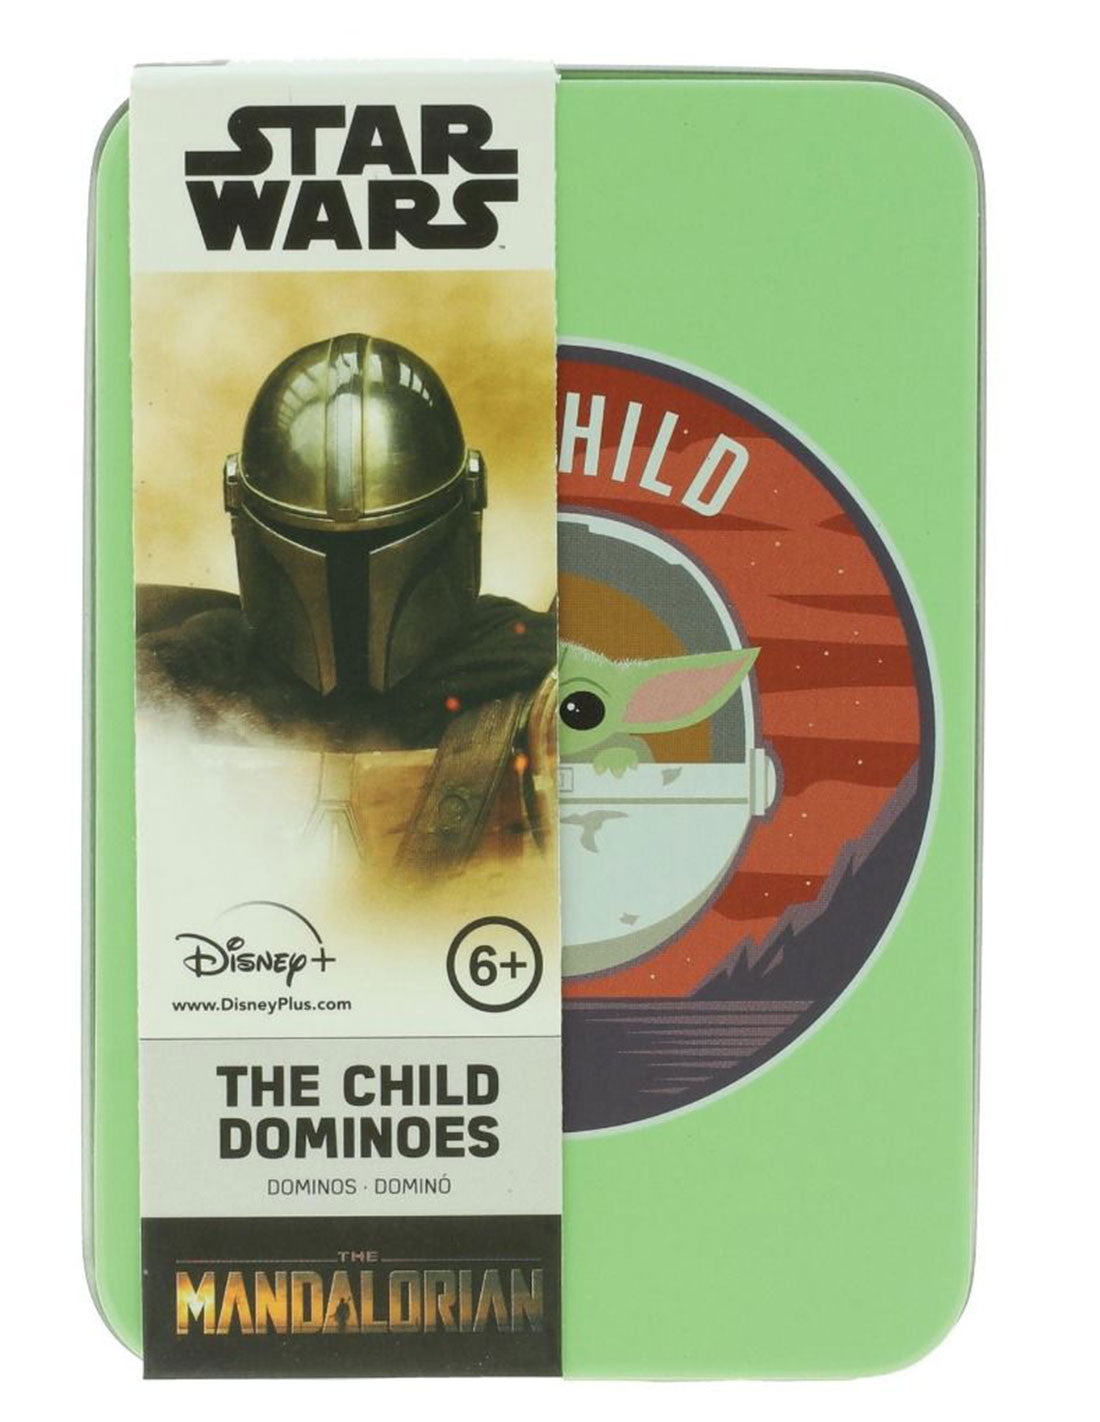 Dominos The Mandalorian Star Wars - The Child